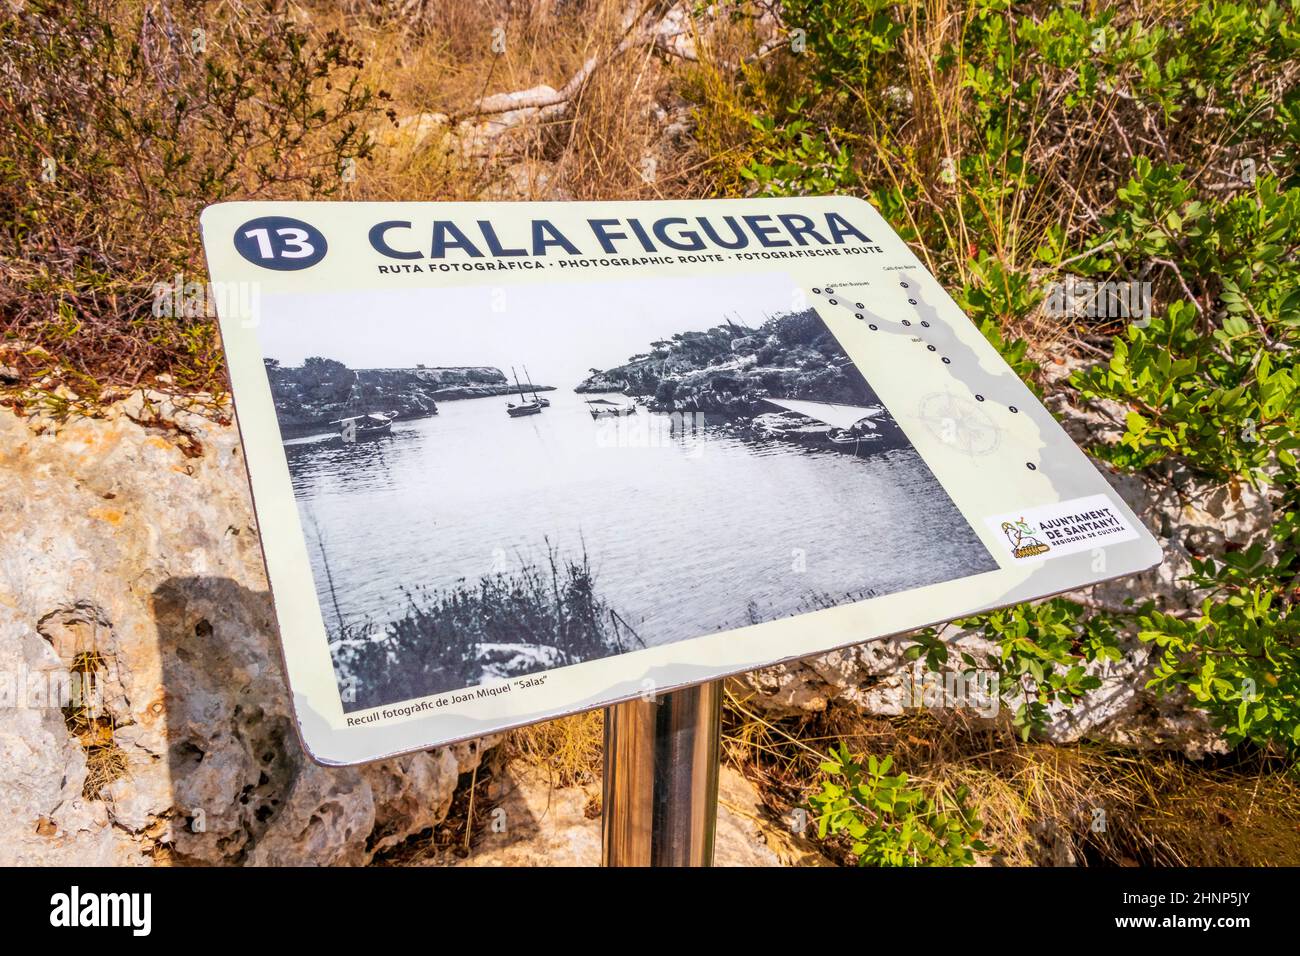 Photographic route sign Calo Busques Boira Cala Figuera Mallorca Spain. Stock Photo